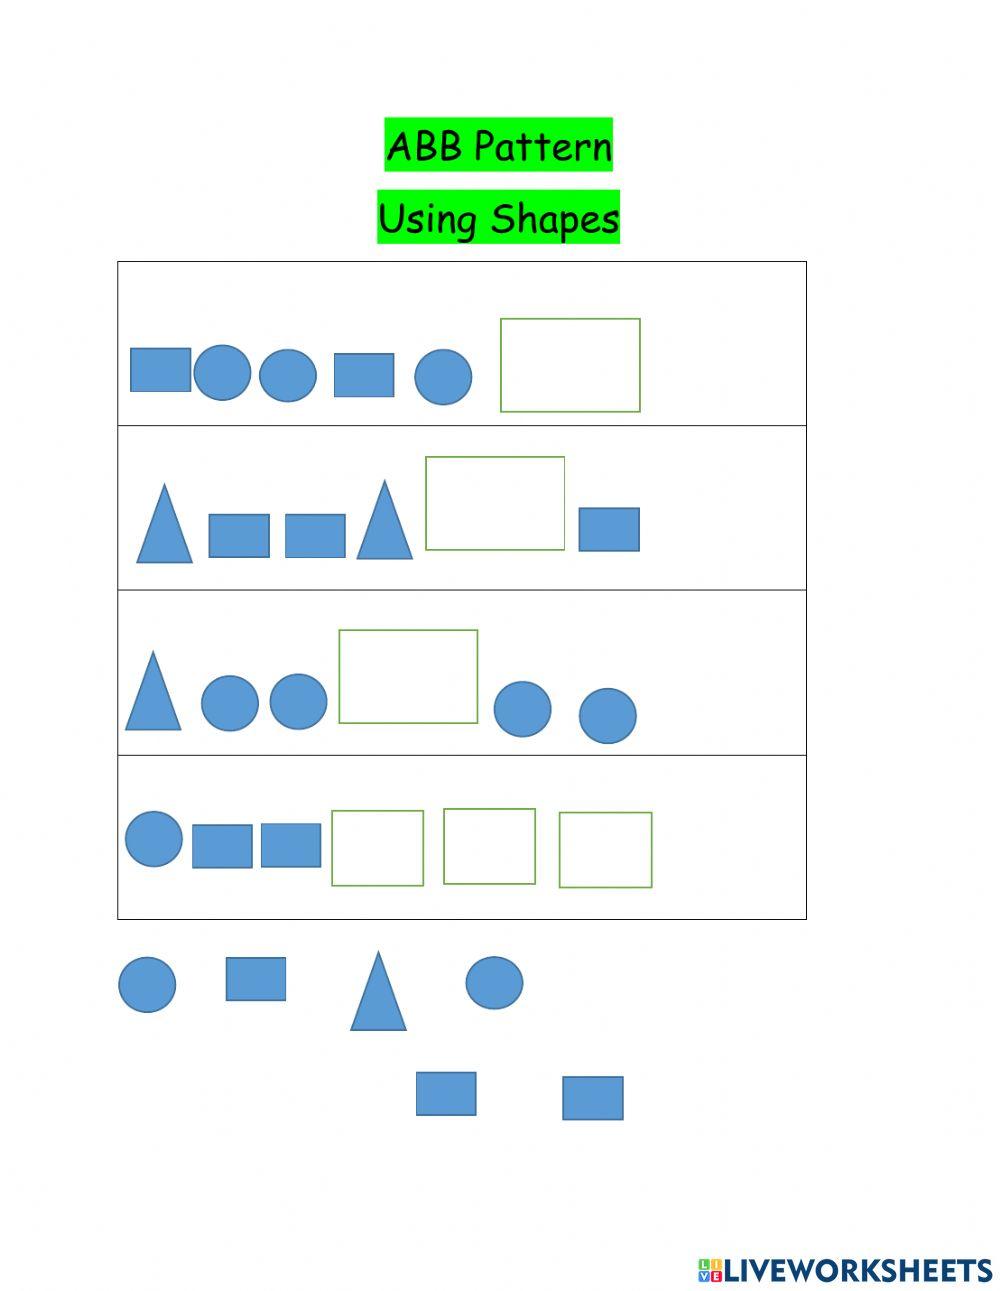 ABB Pattern using Shapes